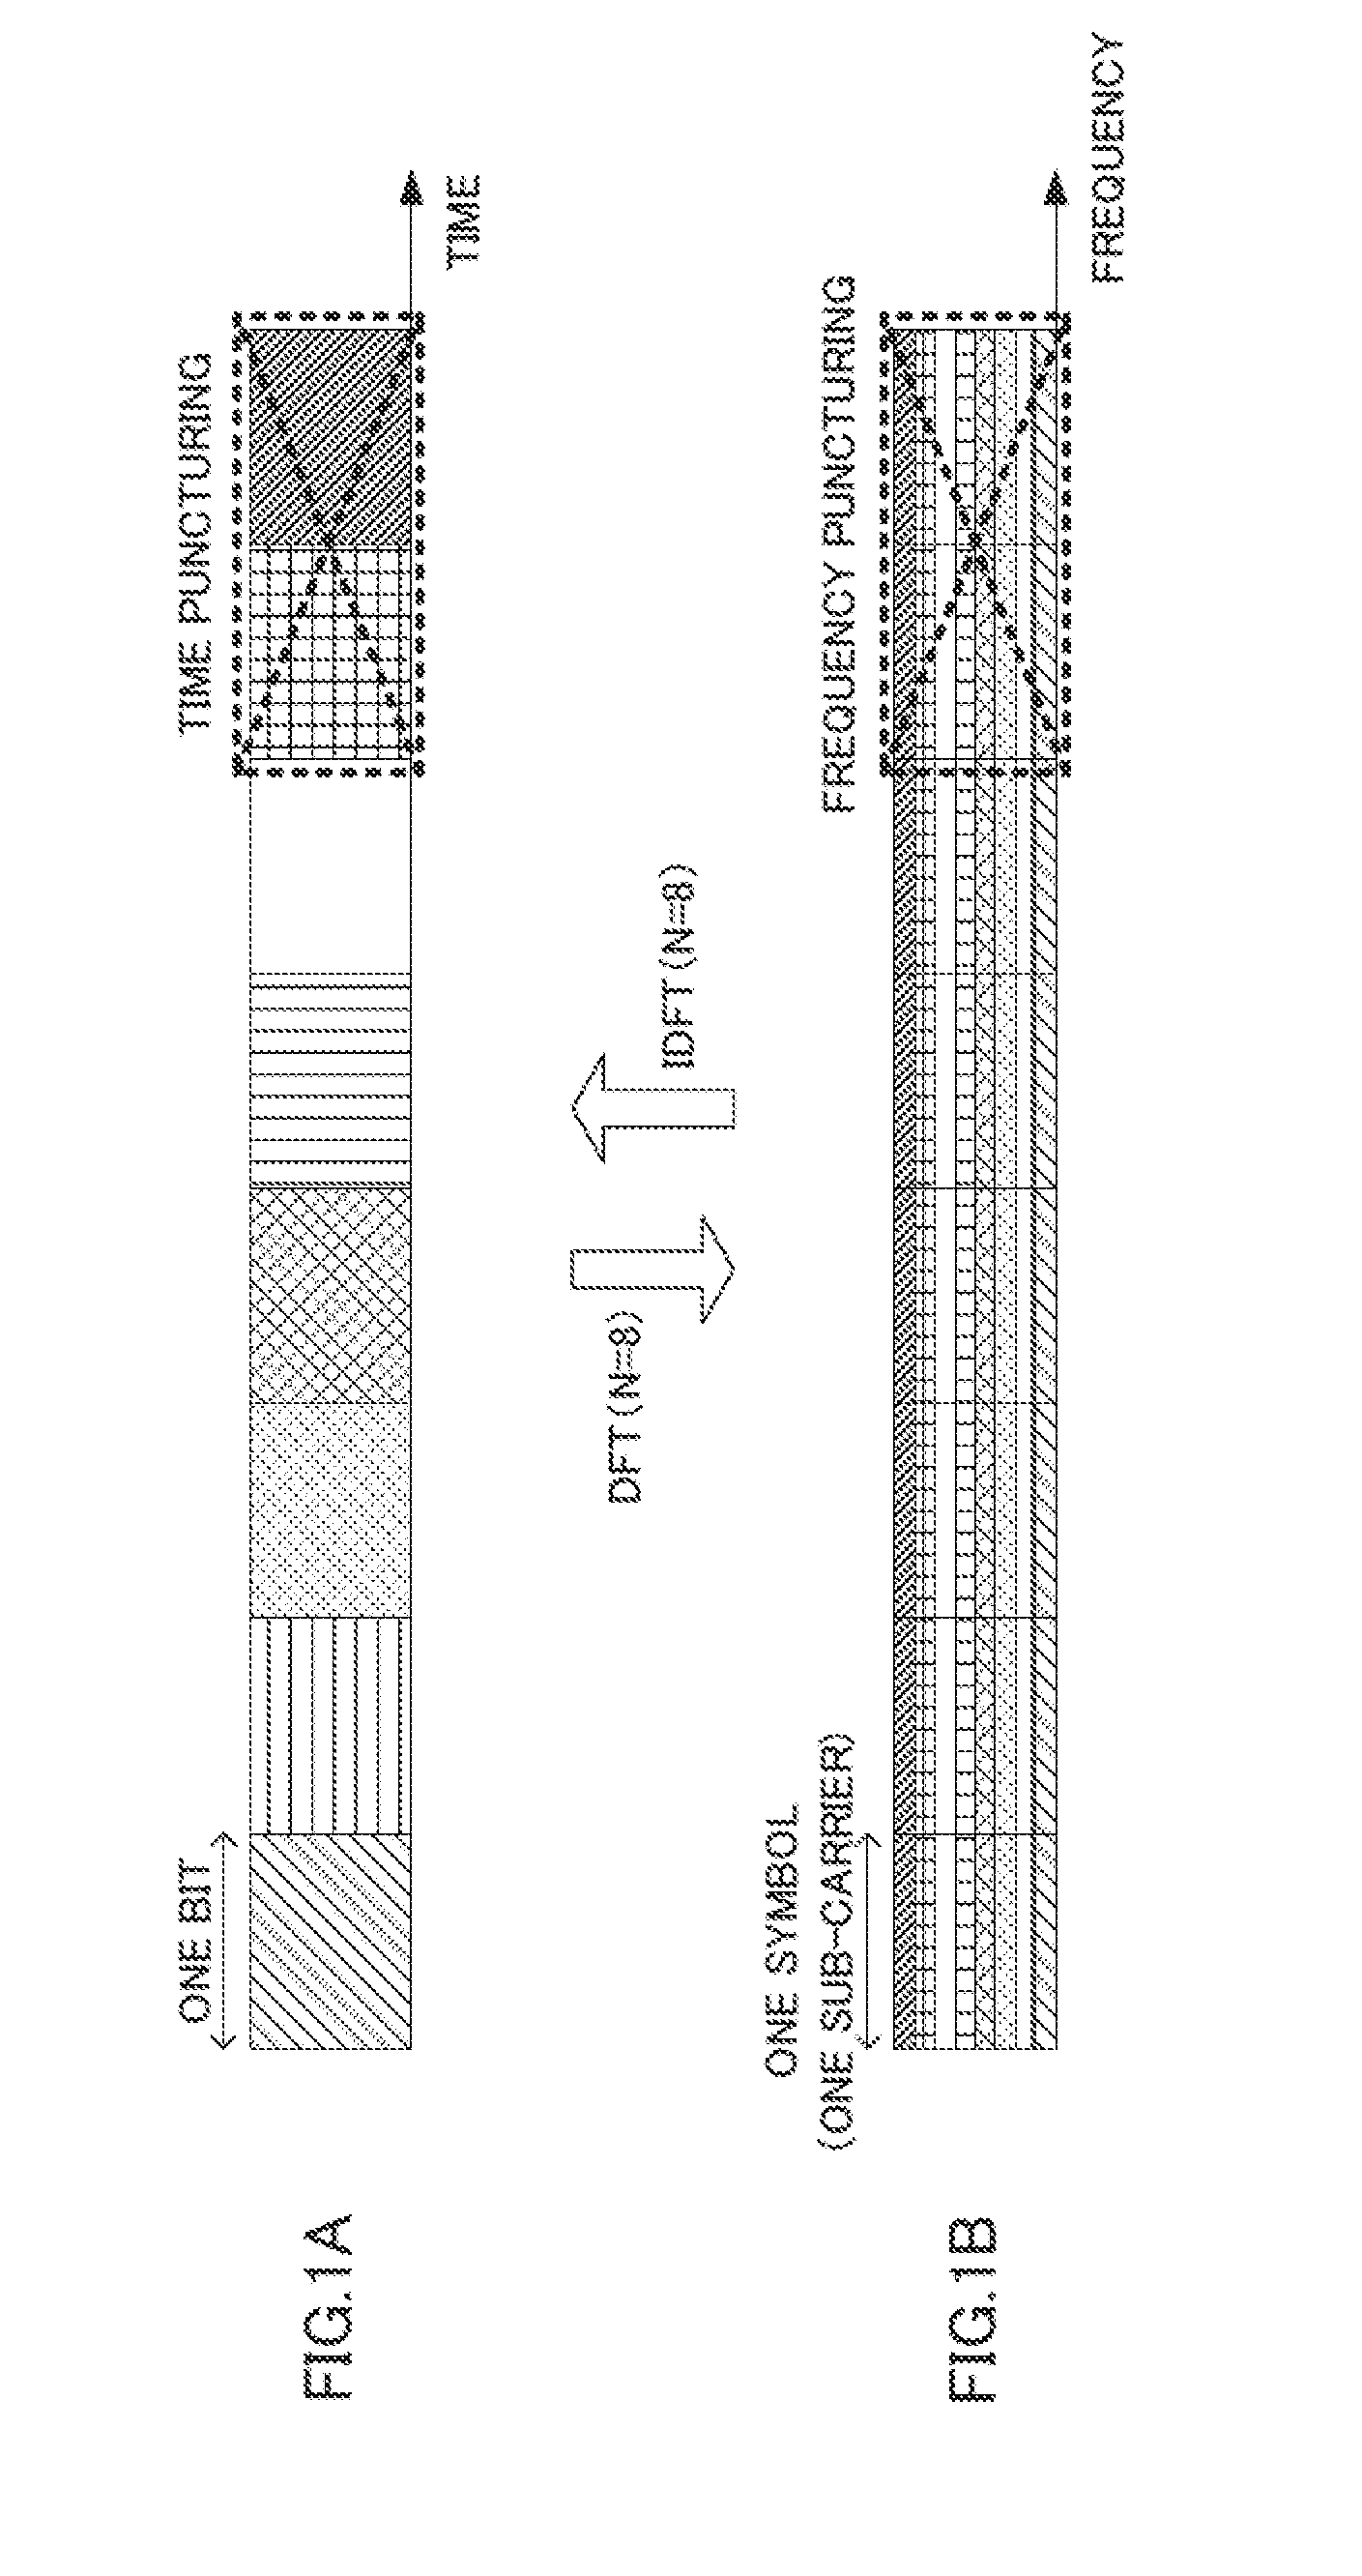 Transmission device and transmission method